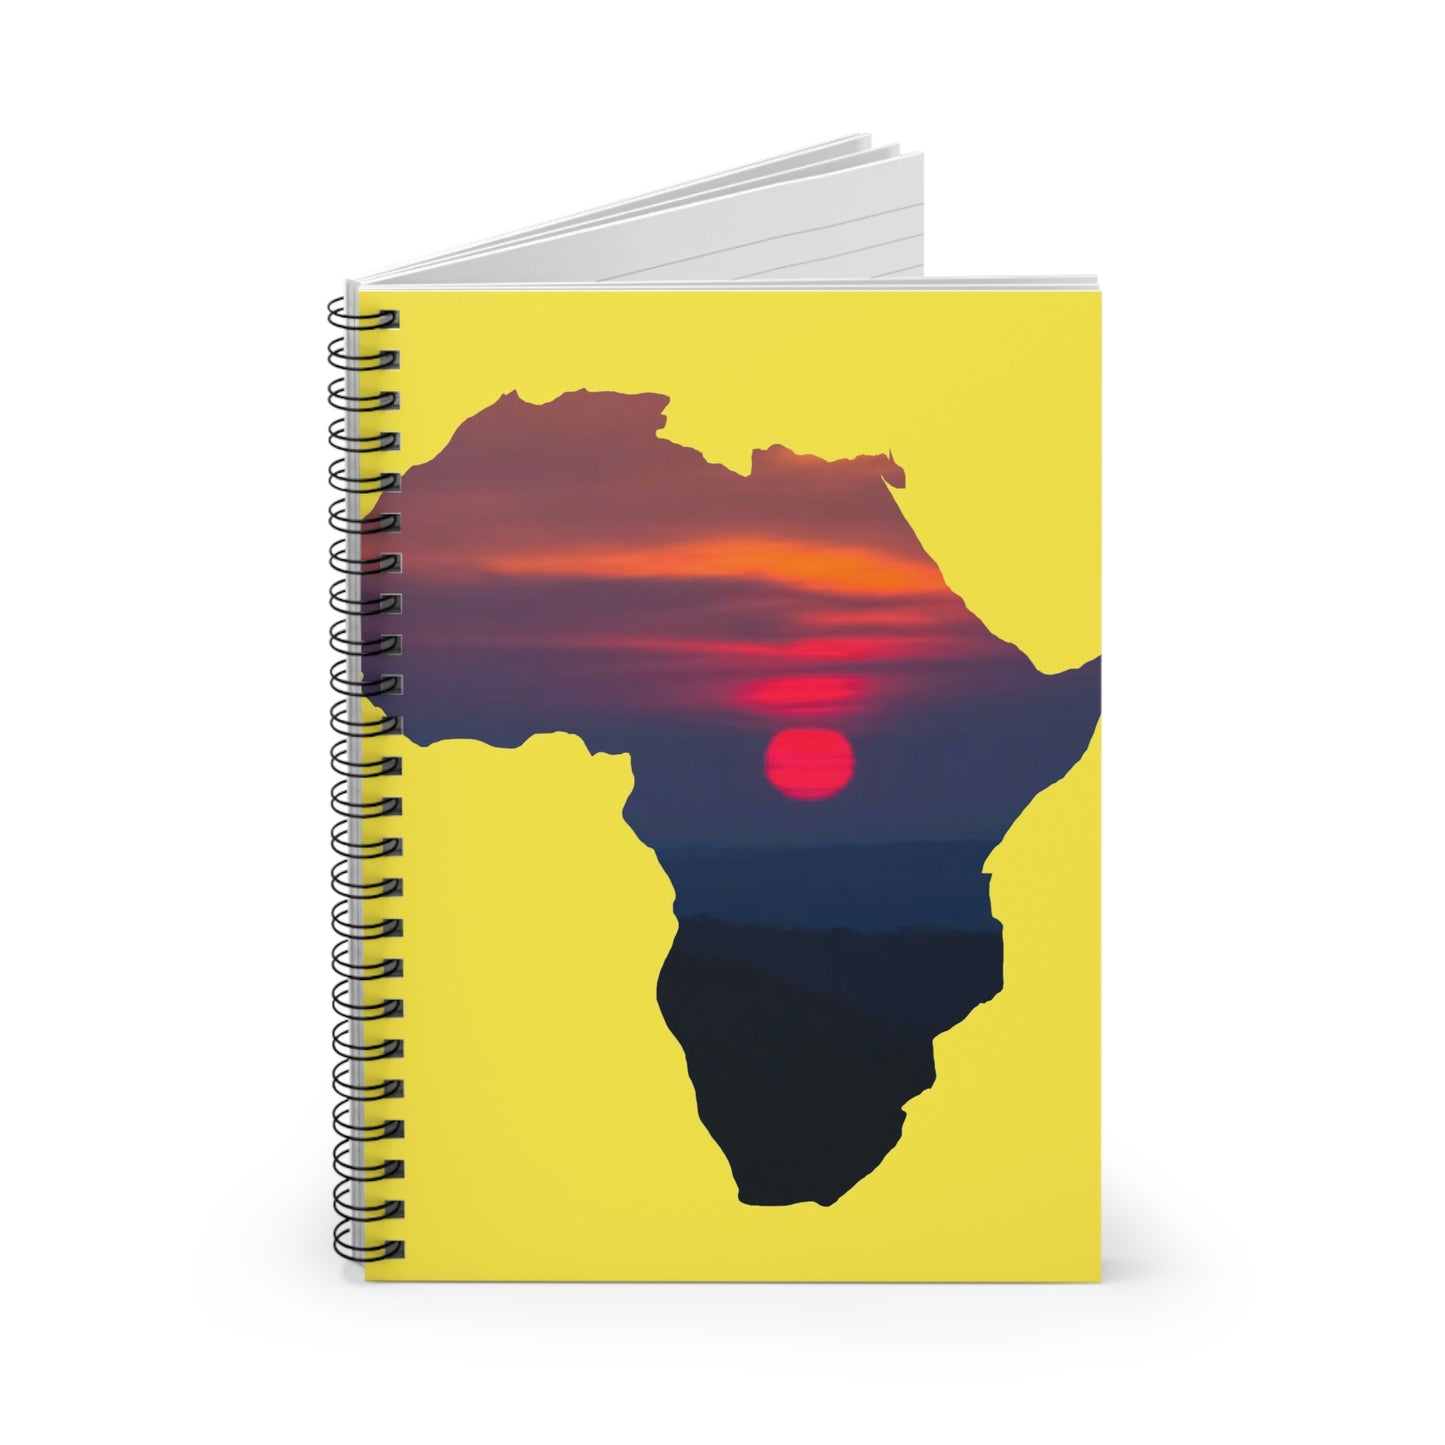 AFRICA - Spiral Notebook - Ruled Line